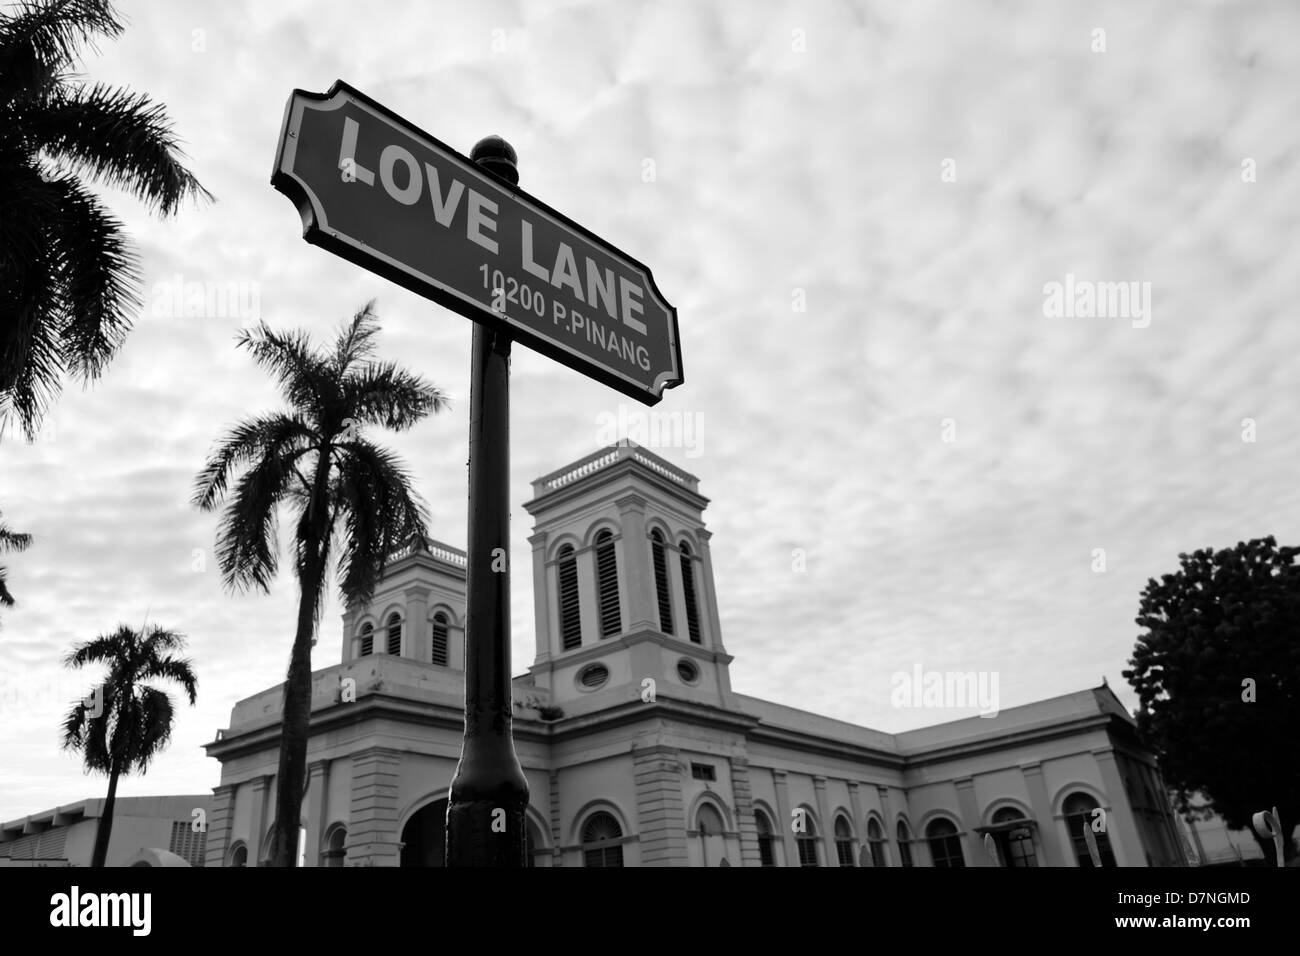 Love Lane street sign in George Town, Penang, Malaysia Stock Photo